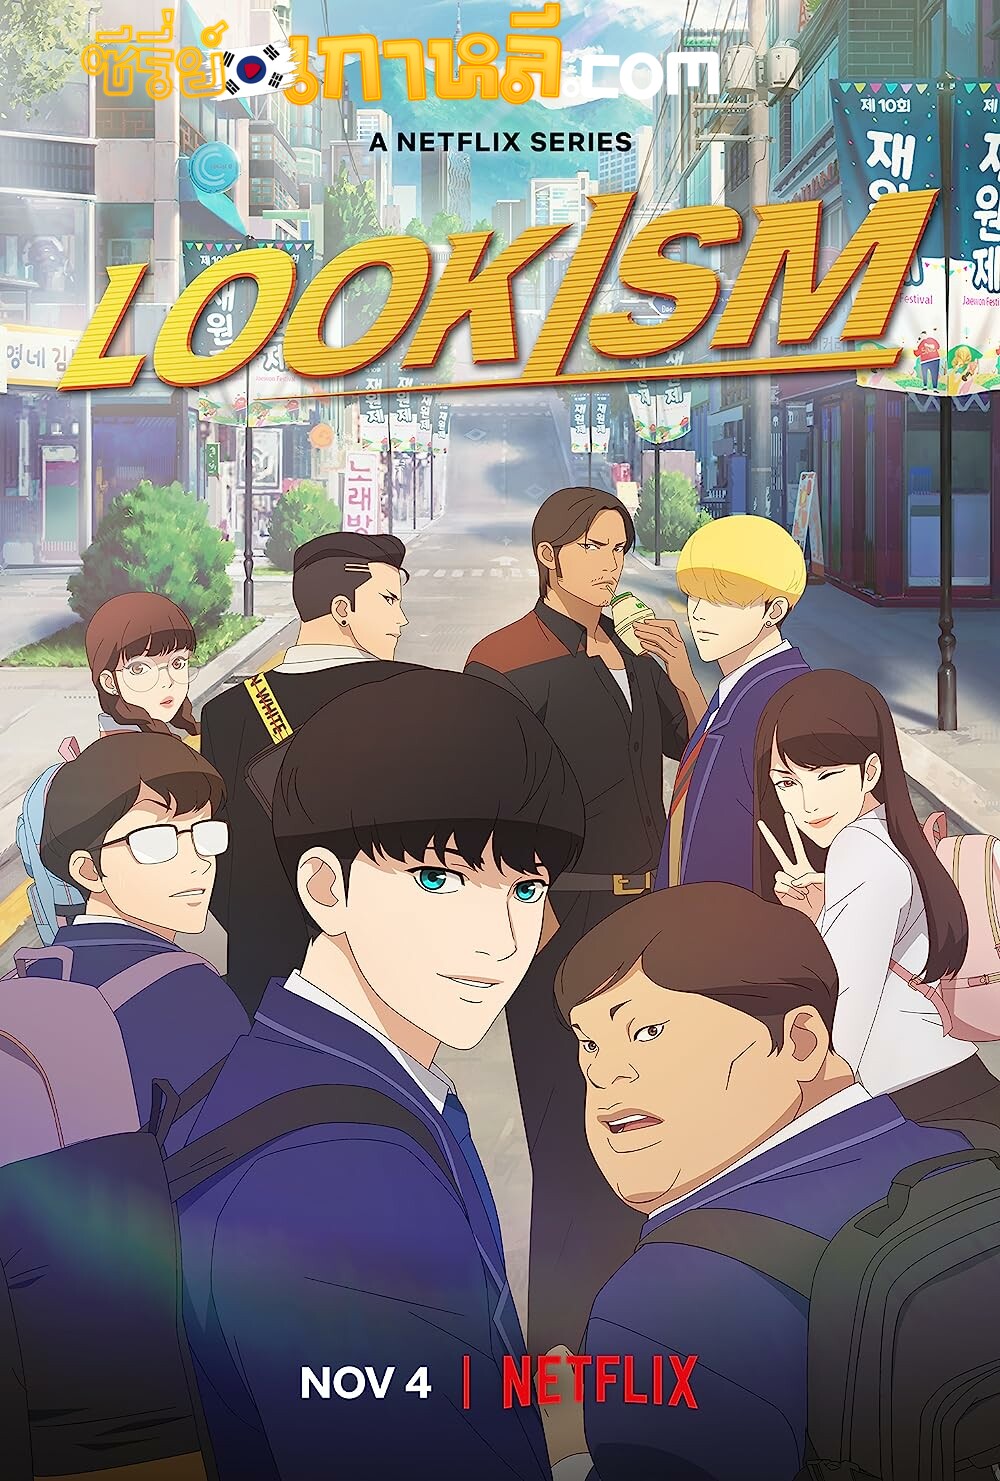 Lookism Anime  Netflix (2022) คนจะหล่อ…ขอเกิดหน่อย ตอนที่ 1-8 จบ พากย์ไทย